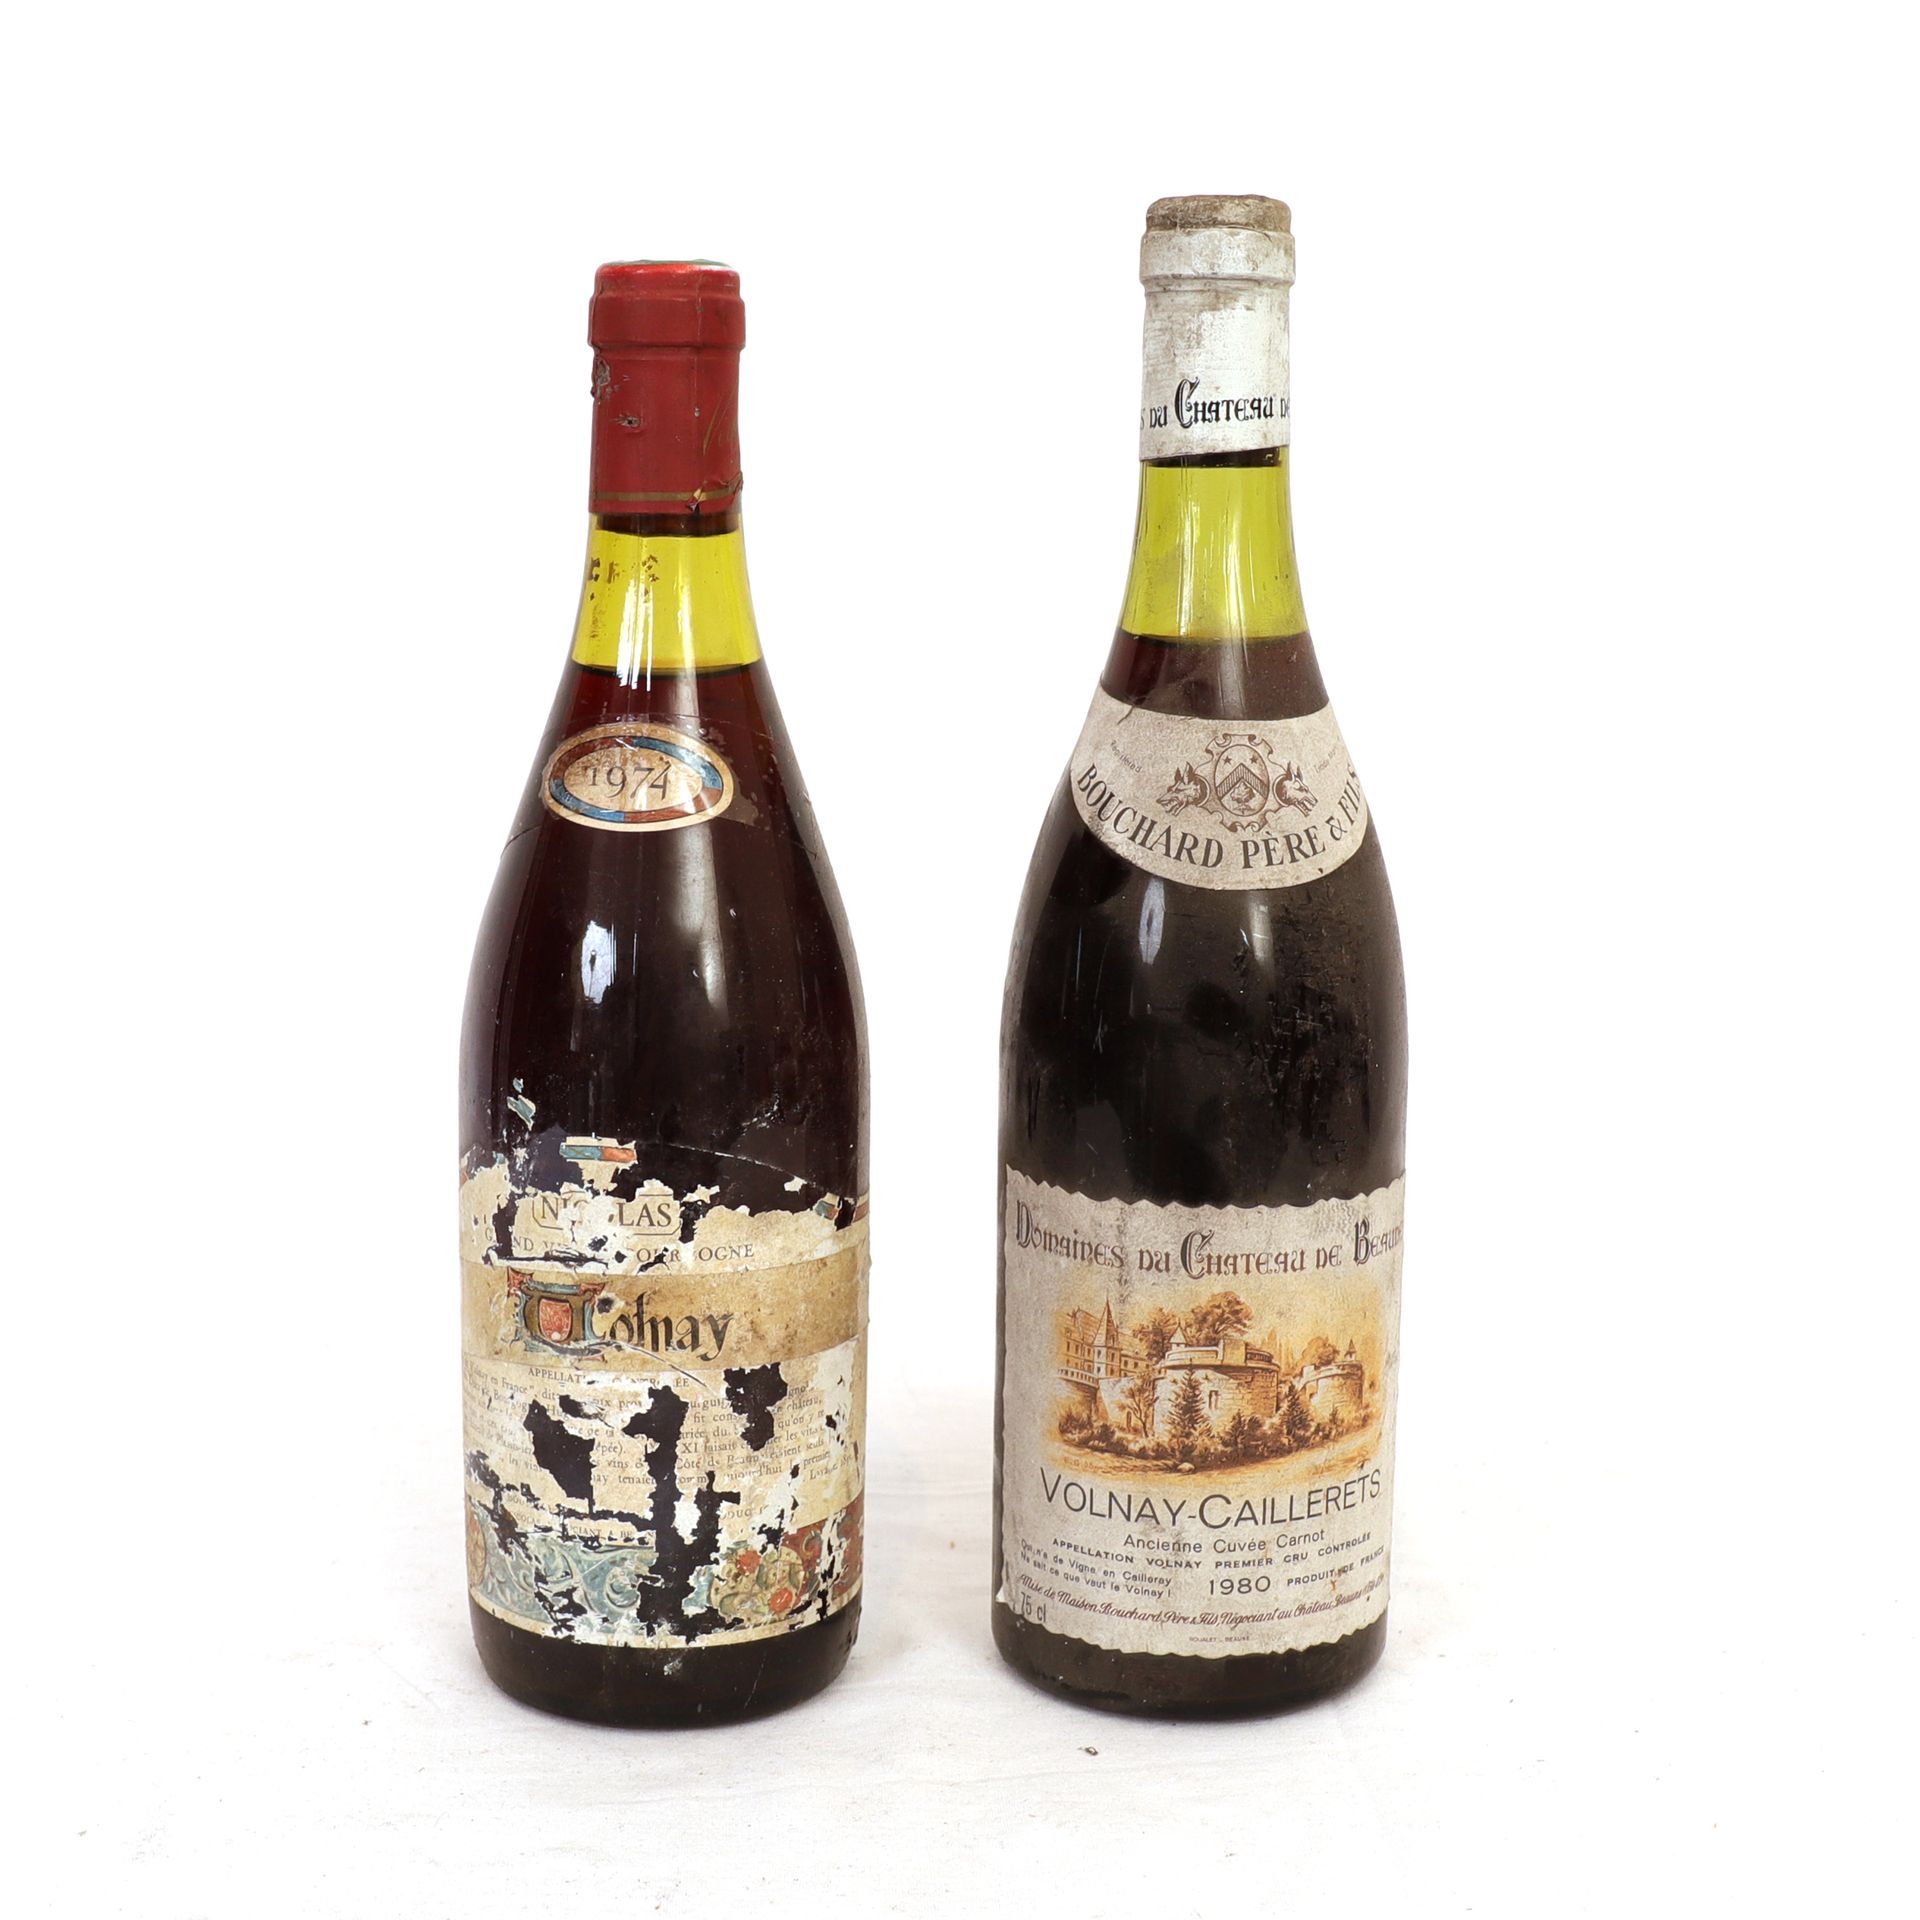 Null 2 Btls de vins de Bourgogne :

- 1 Volnay 1974

- 1 Volnay Cailleret 1980